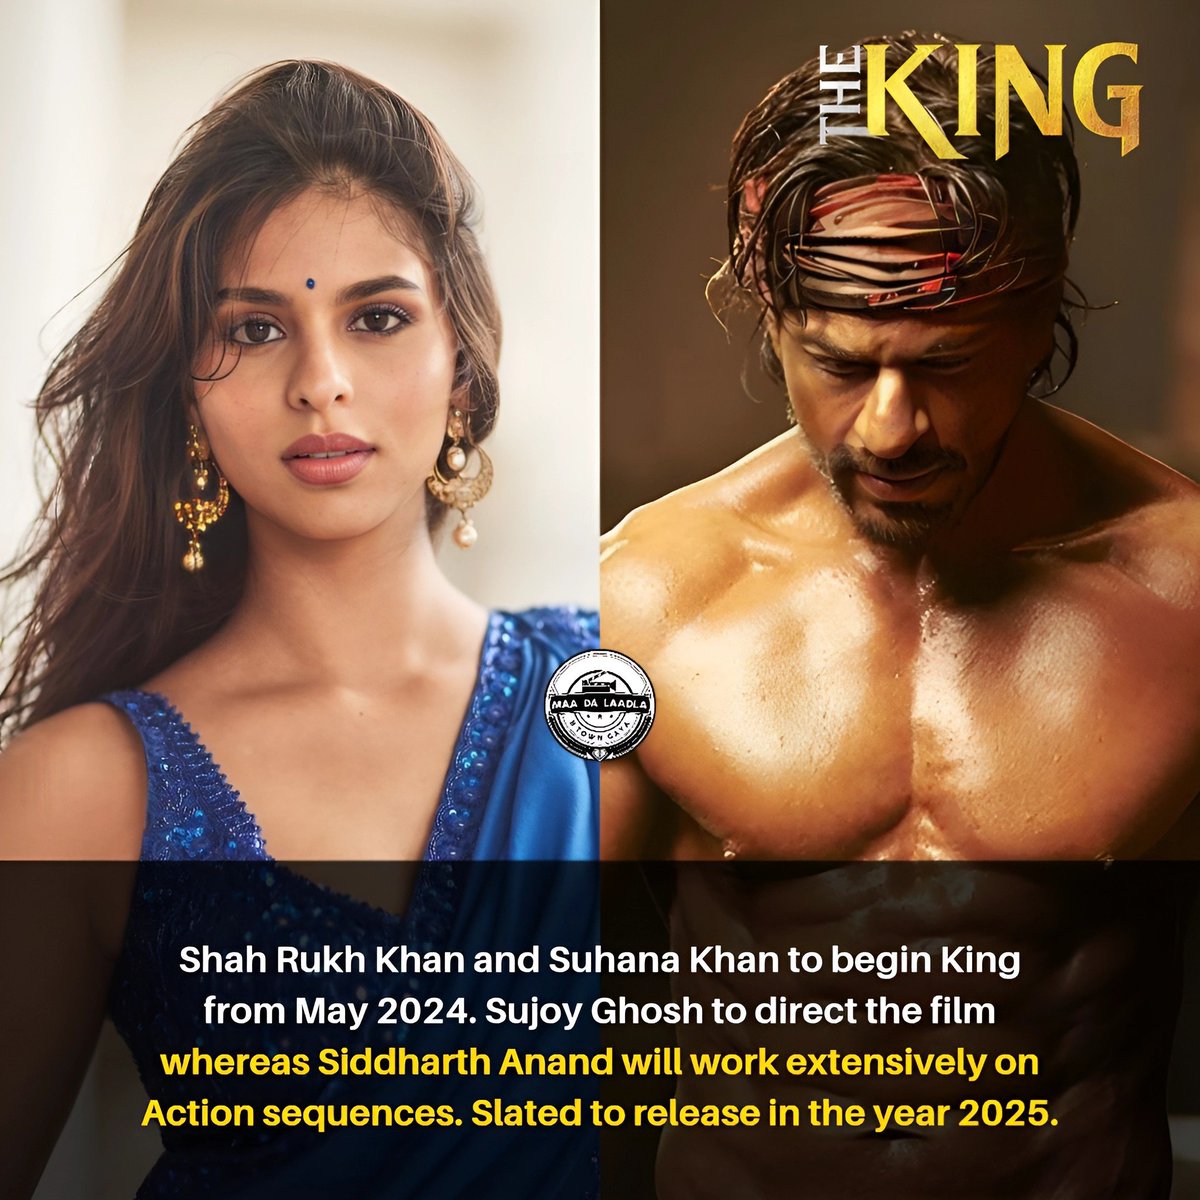 #TheKing will arrive soon in the theatres! 😎🔥 #King

#ShahRukhKhan #SuhanaKhan #SujoyGhosh #SiddharthAnand